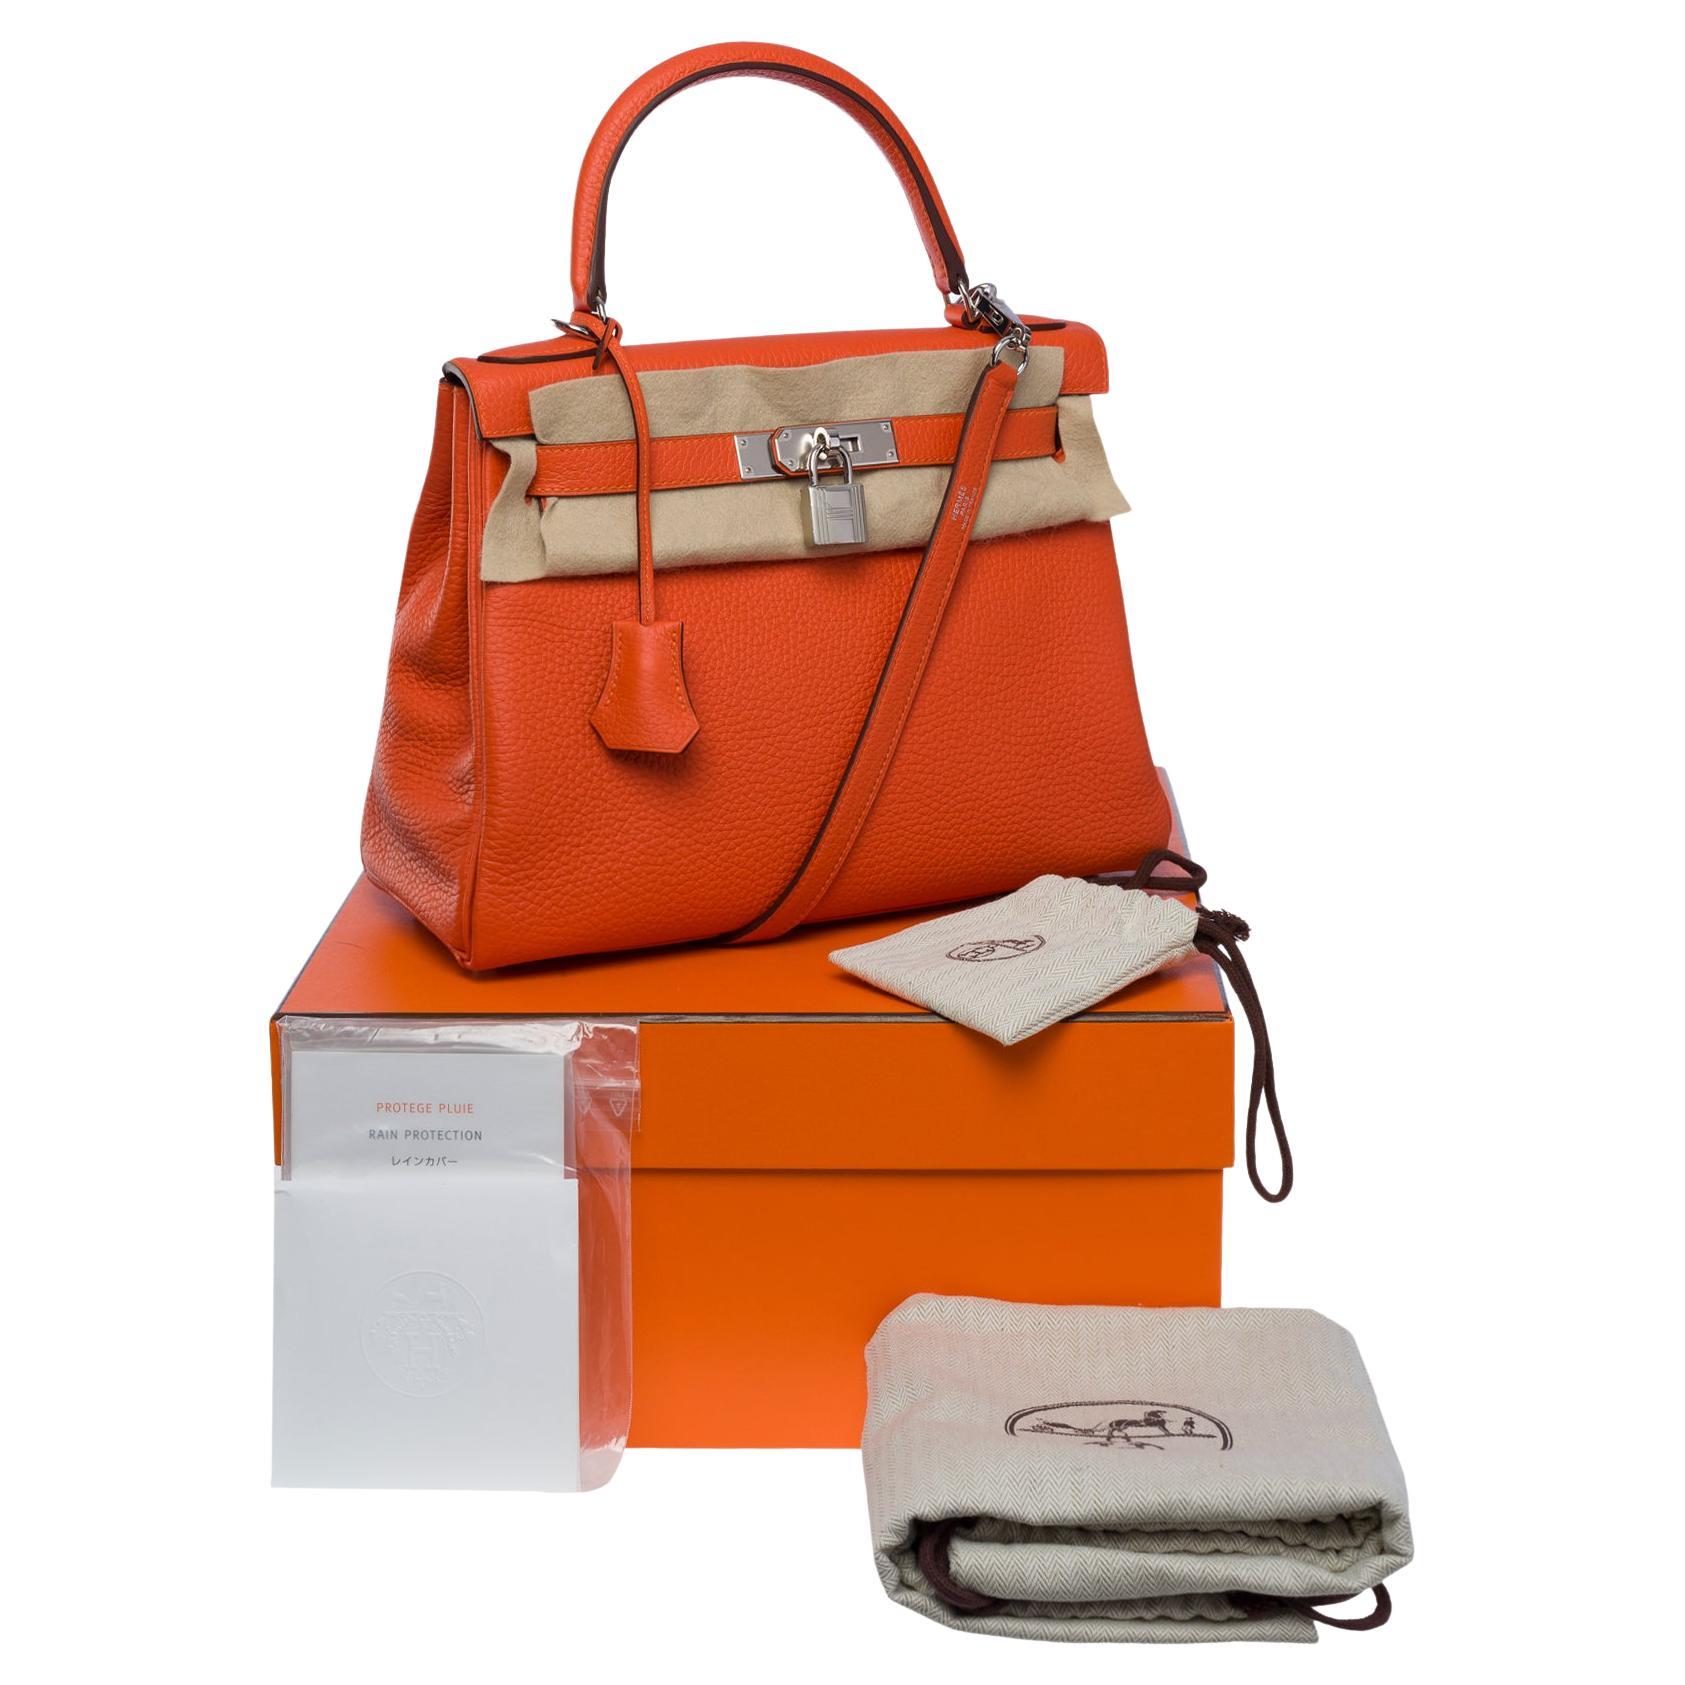 New Amazing Hermes Kelly 28 retourne handbag strap in Orange Feu leather, SHW For Sale